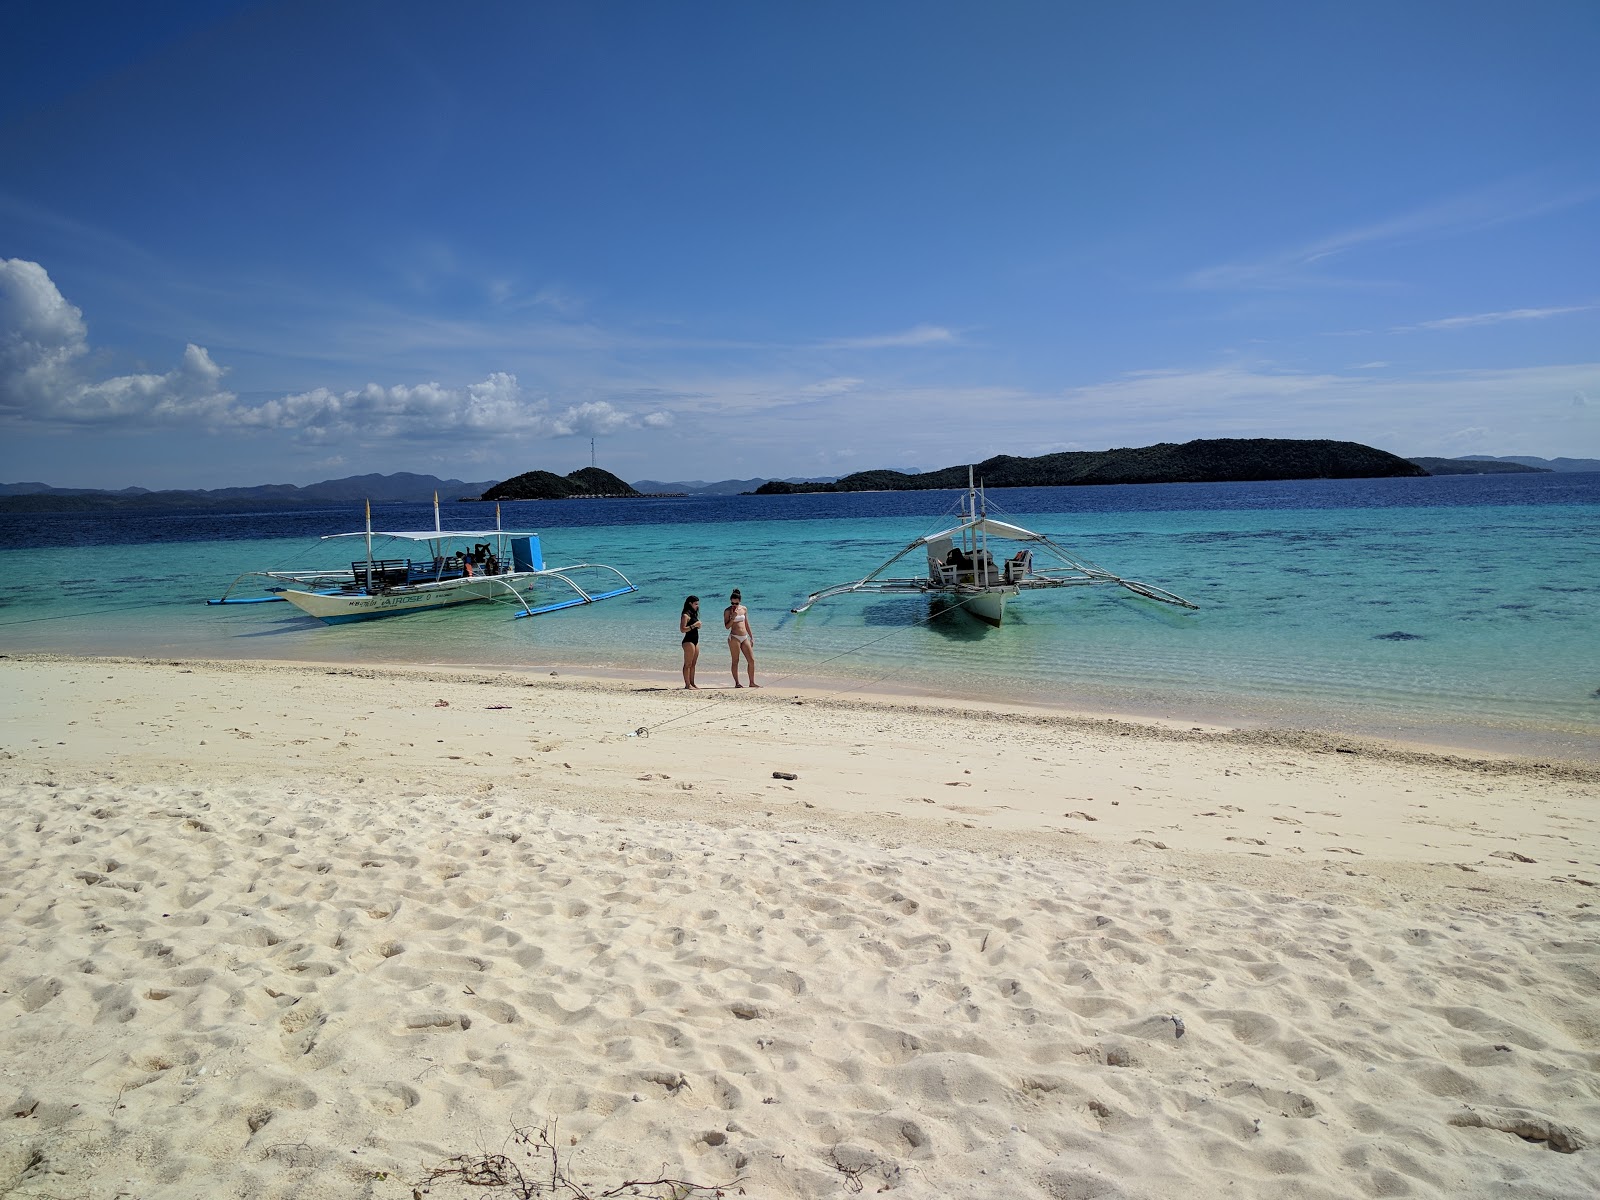 Foto di Nagbinet Island con una superficie del sabbia bianca